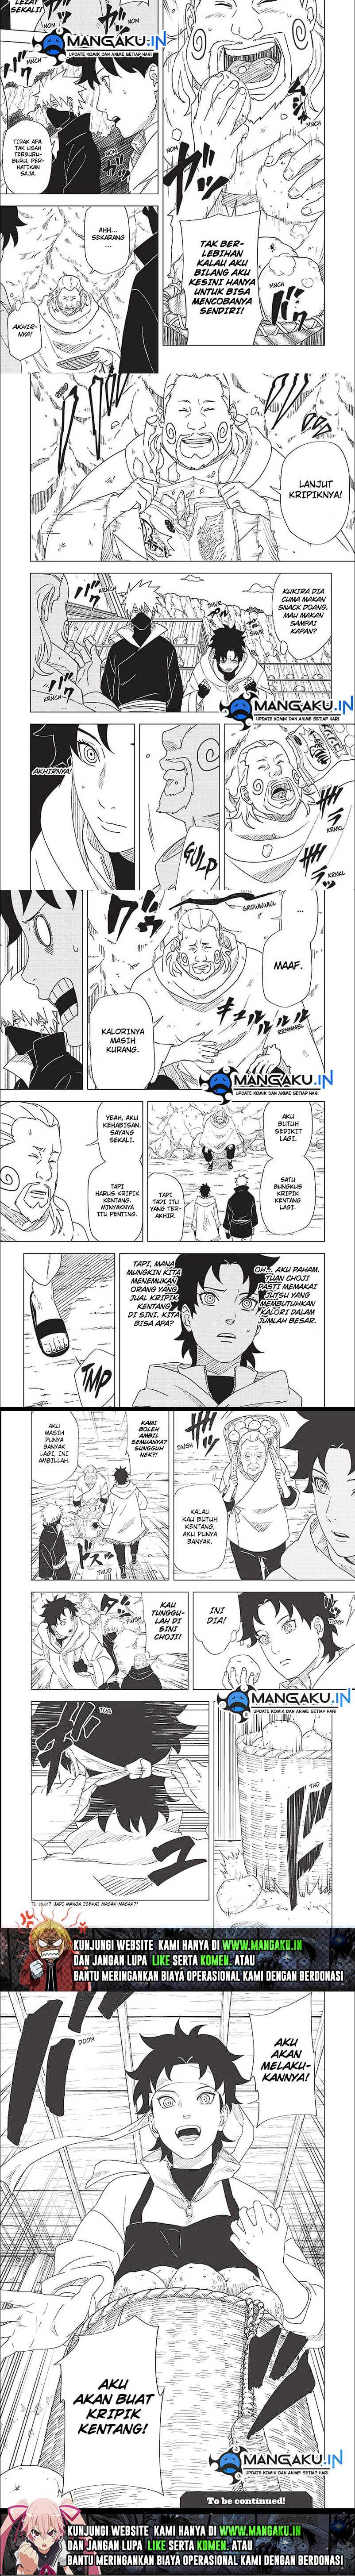 Naruto: Konoha’s Story—The Steam Ninja Scrolls Chapter 09